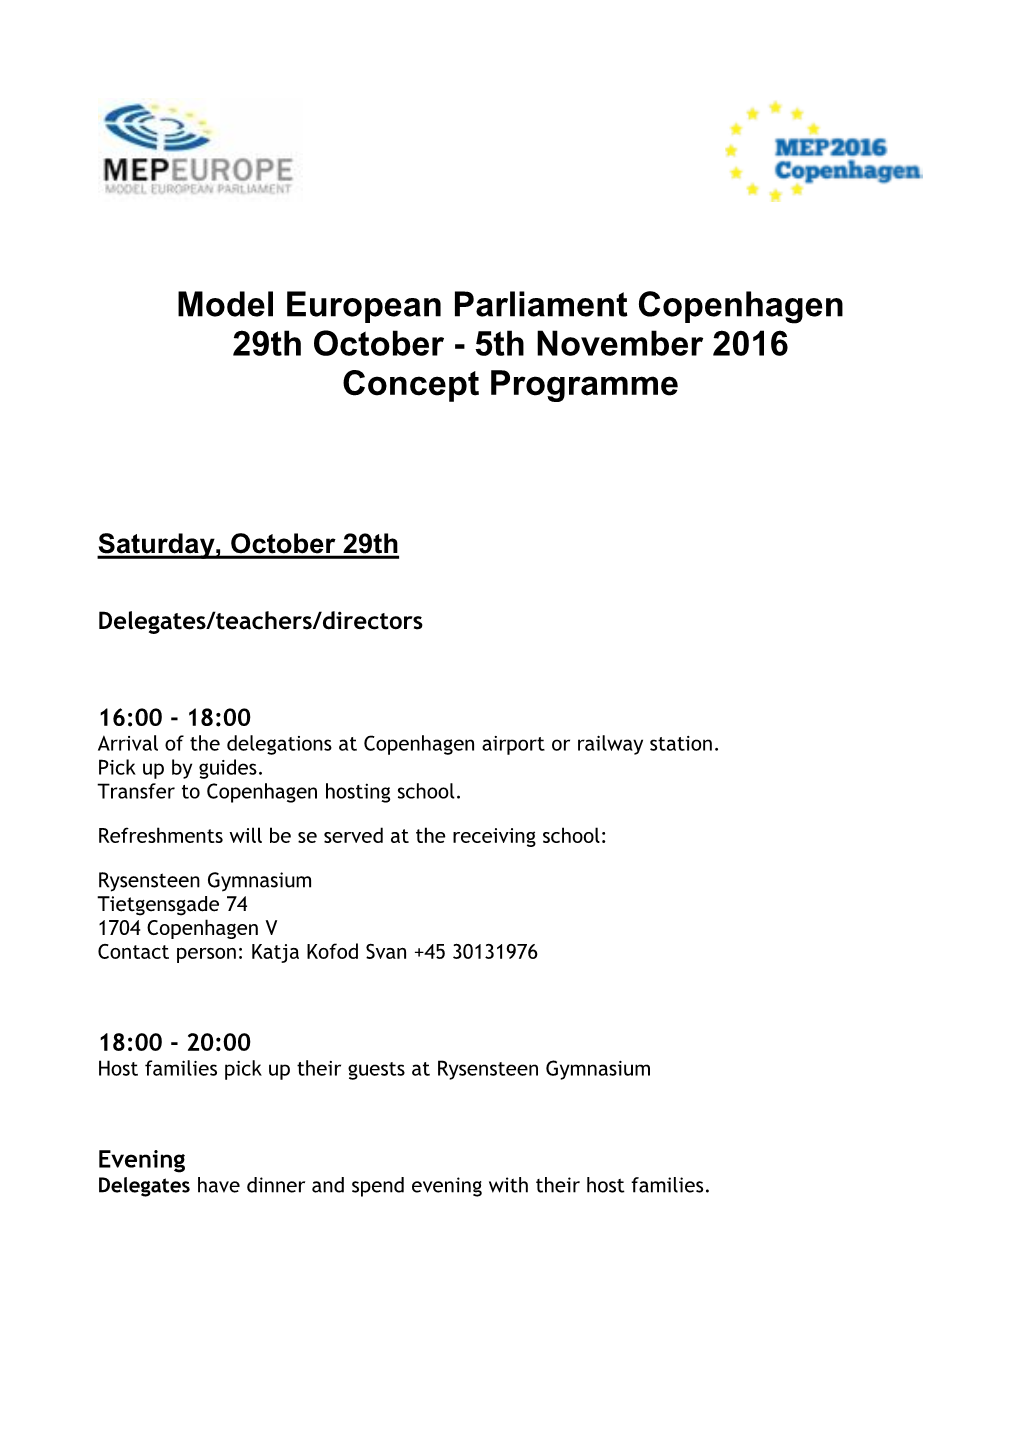 Model European Parliament Copenhagen 29Th October - 5Th November 2016 Concept Programme